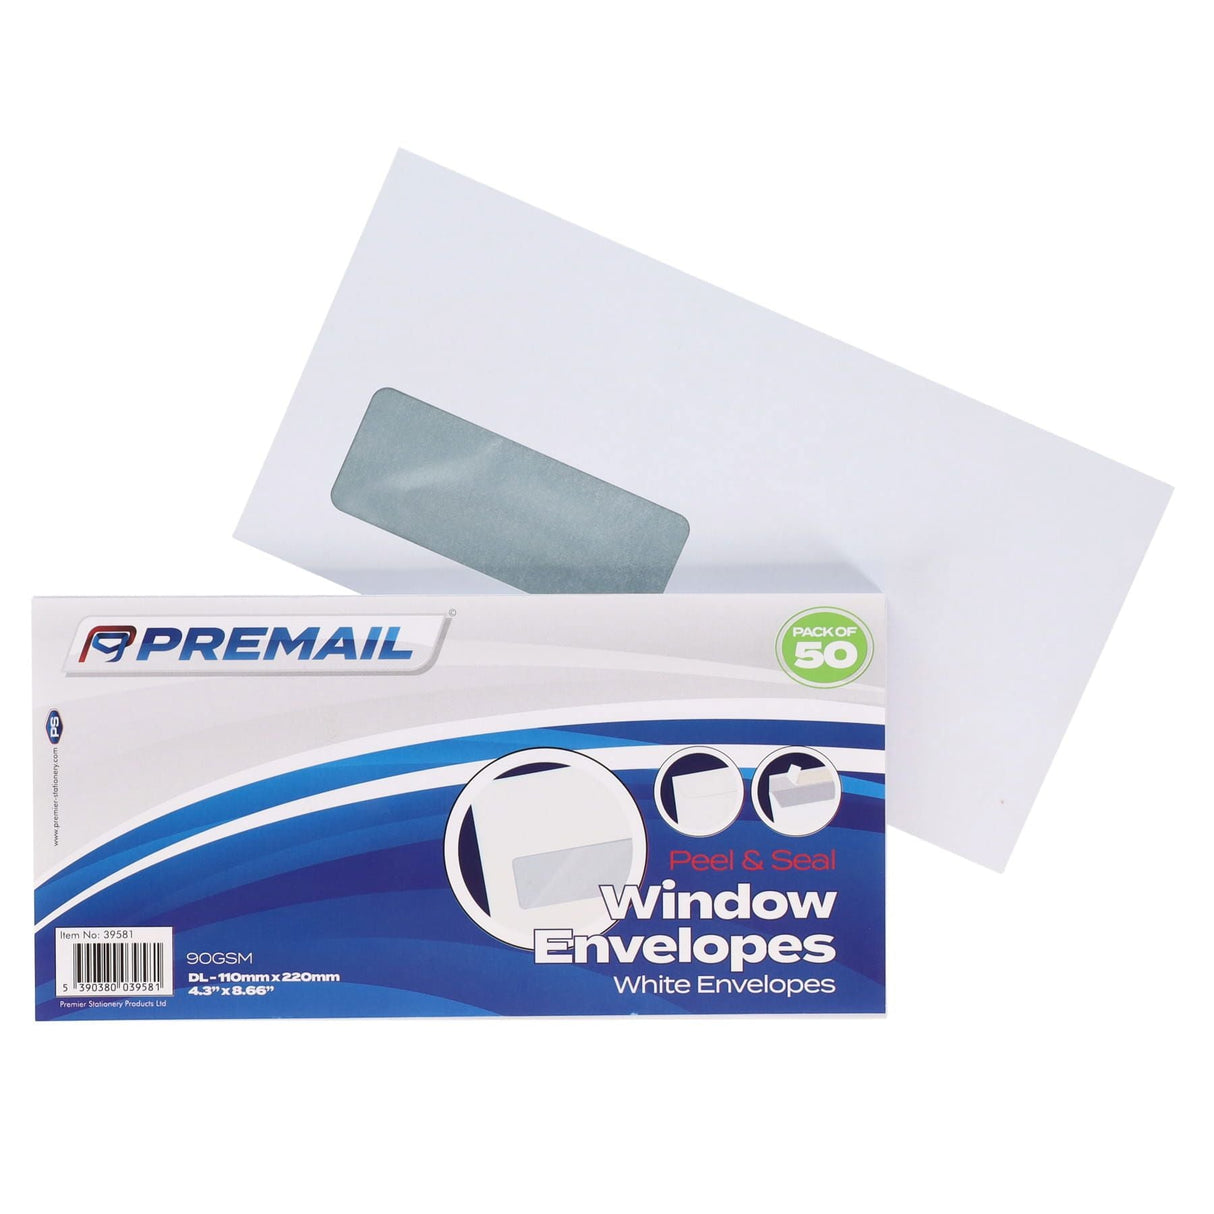 Premail DL Peel & Seal Window Envelopes - White - Pack of 50-Envelopes-Premail|StationeryShop.co.uk